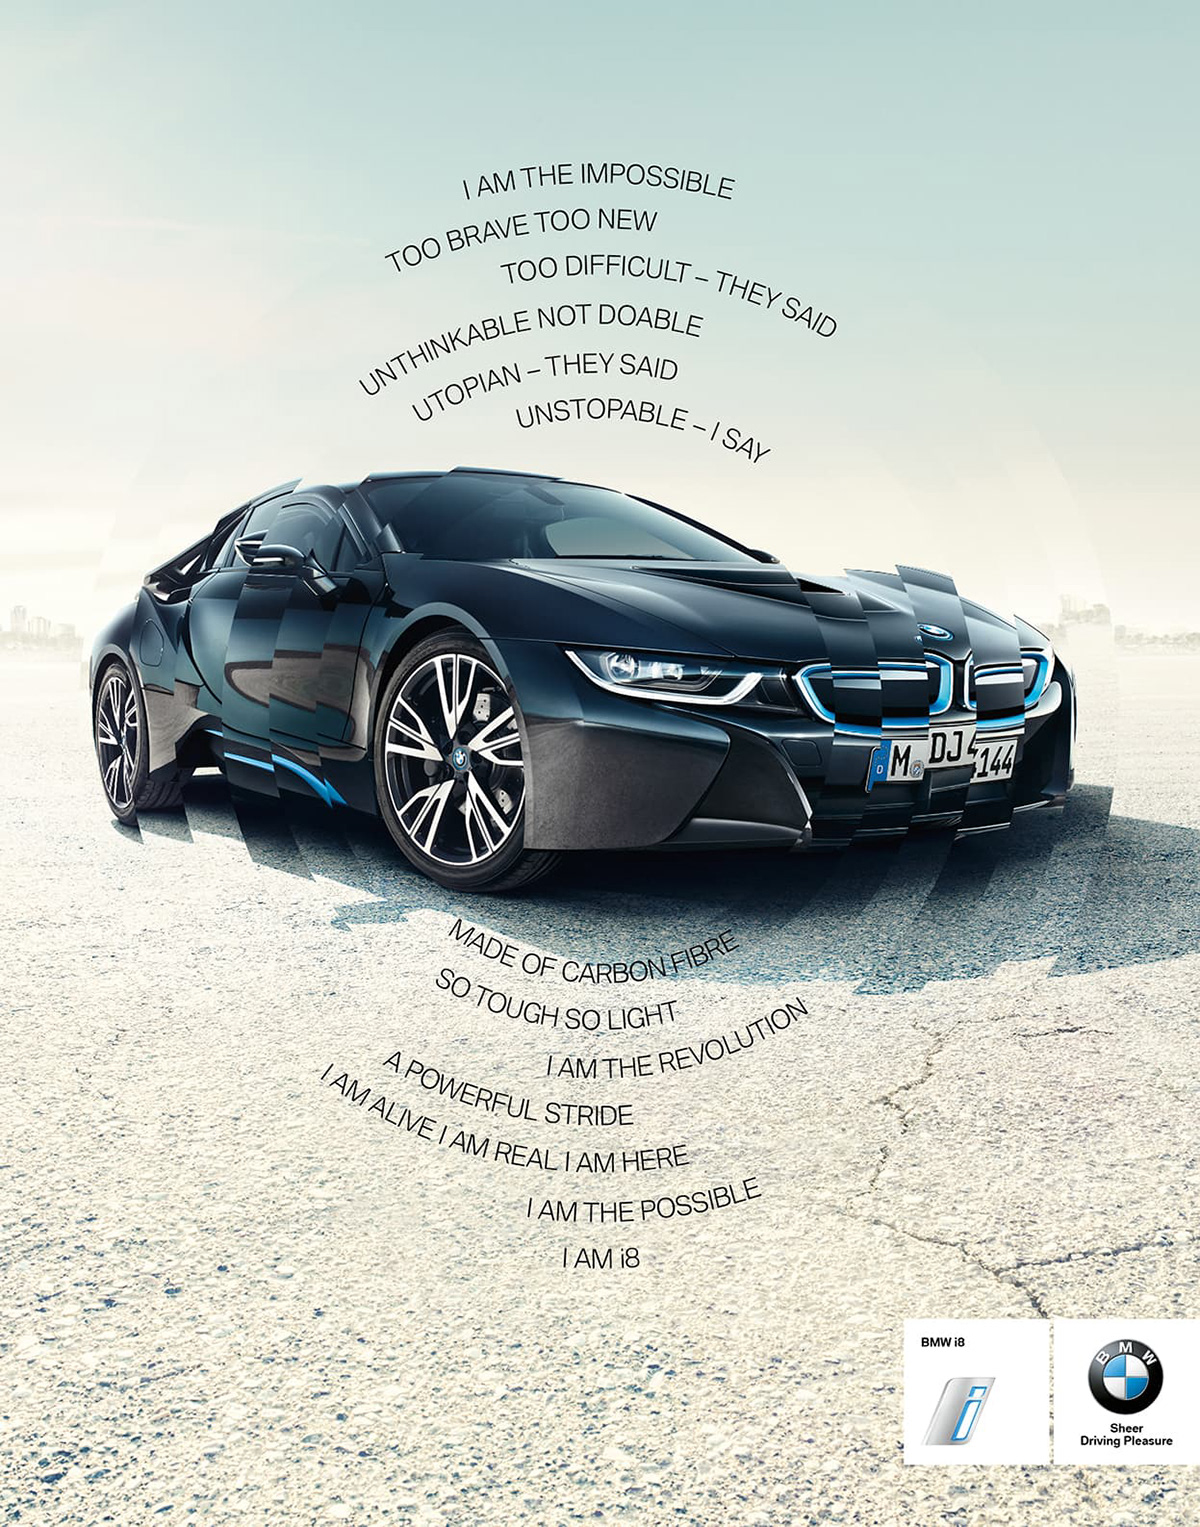 BMW campaign gusnavsant I8 selviceplan